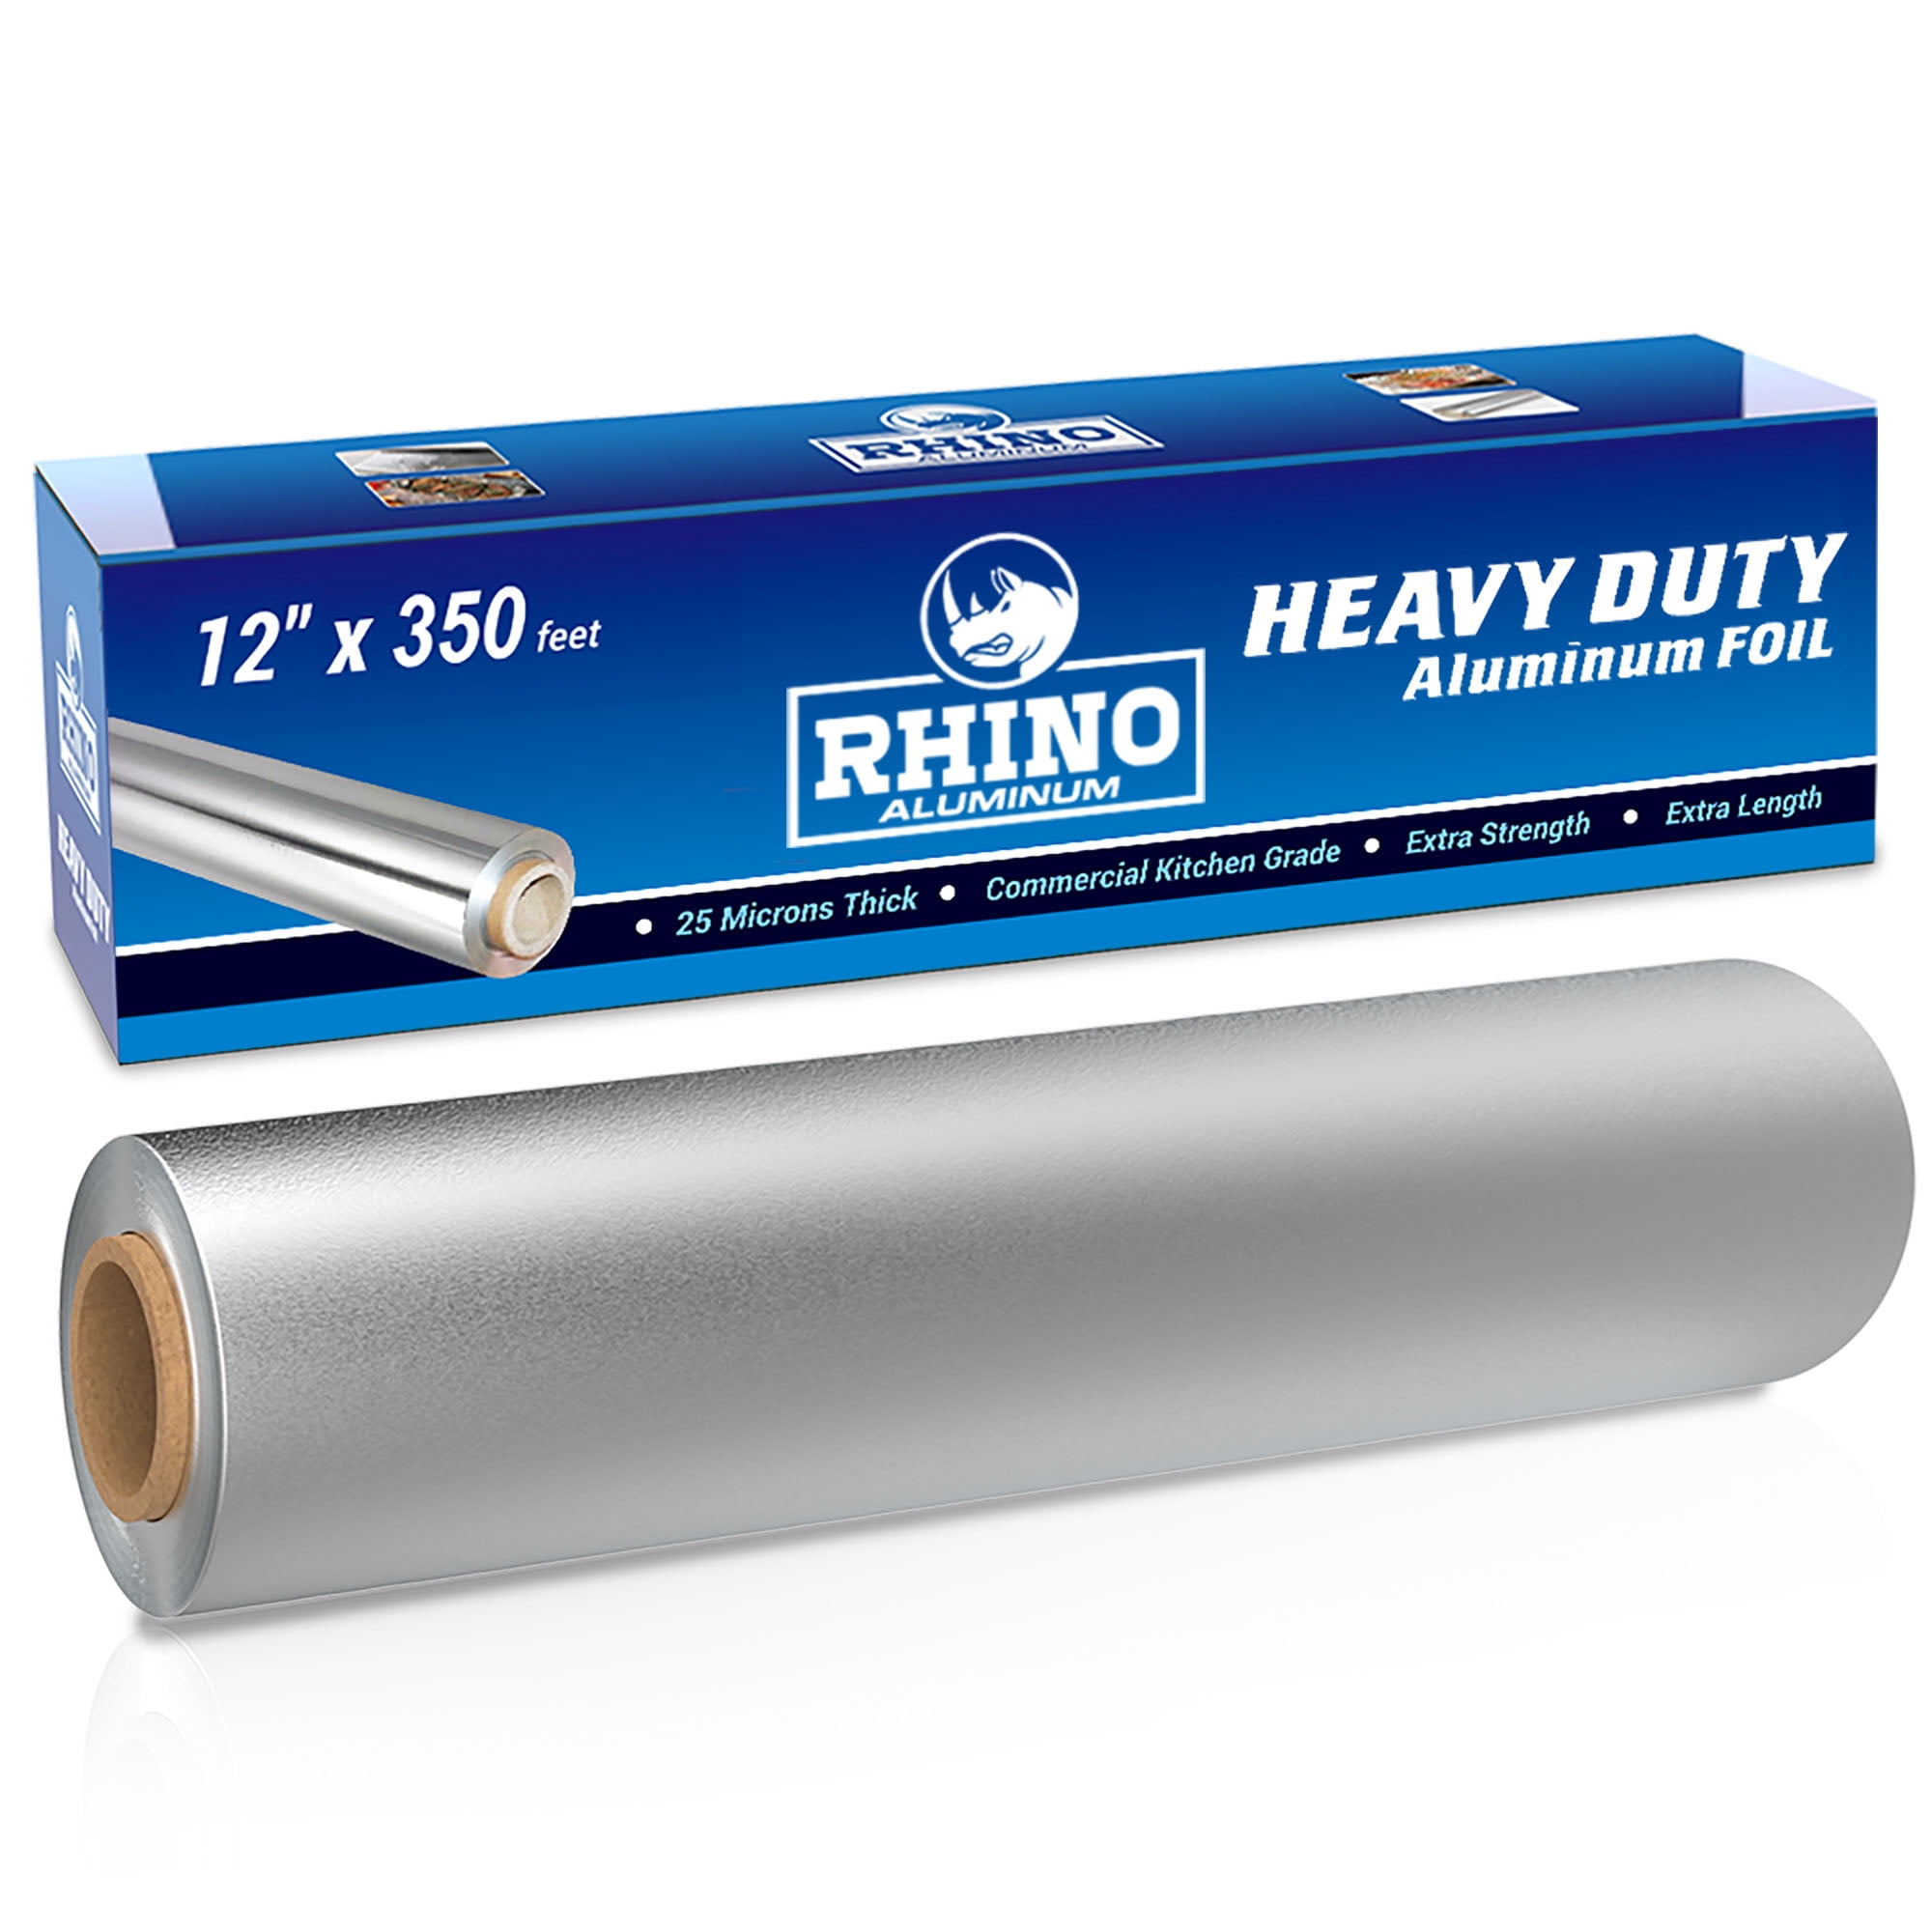 Heavy Duty Aluminum Foil Roll 12" X 500 FT Silver 620-1 Each for sale online 